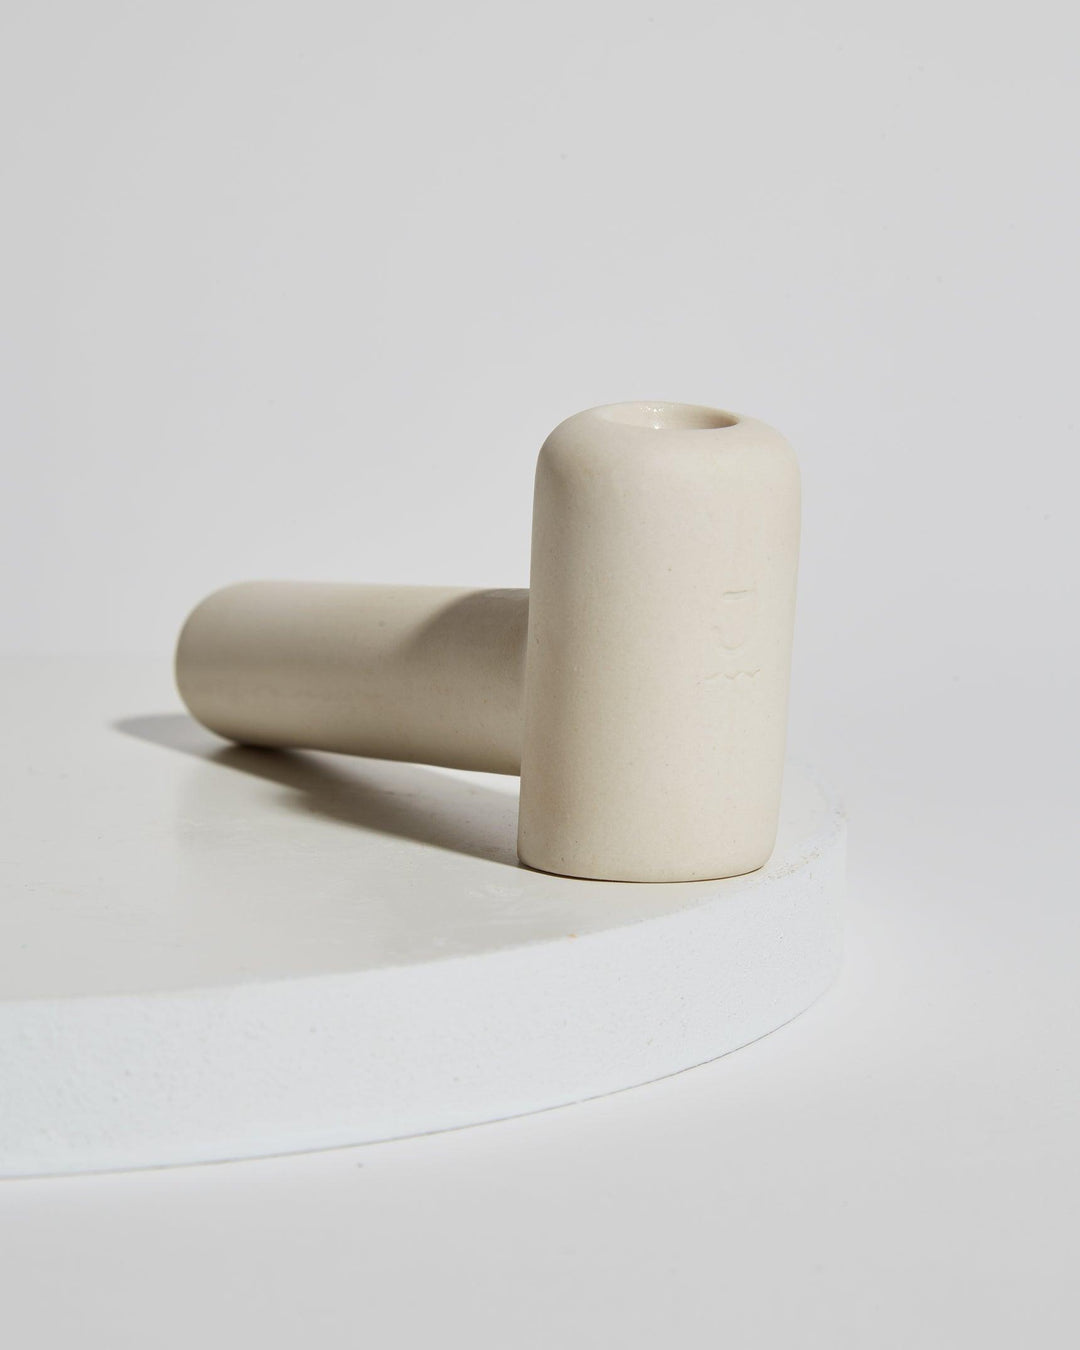 Luxury designer handmade ceramic pipe by Jaunt.